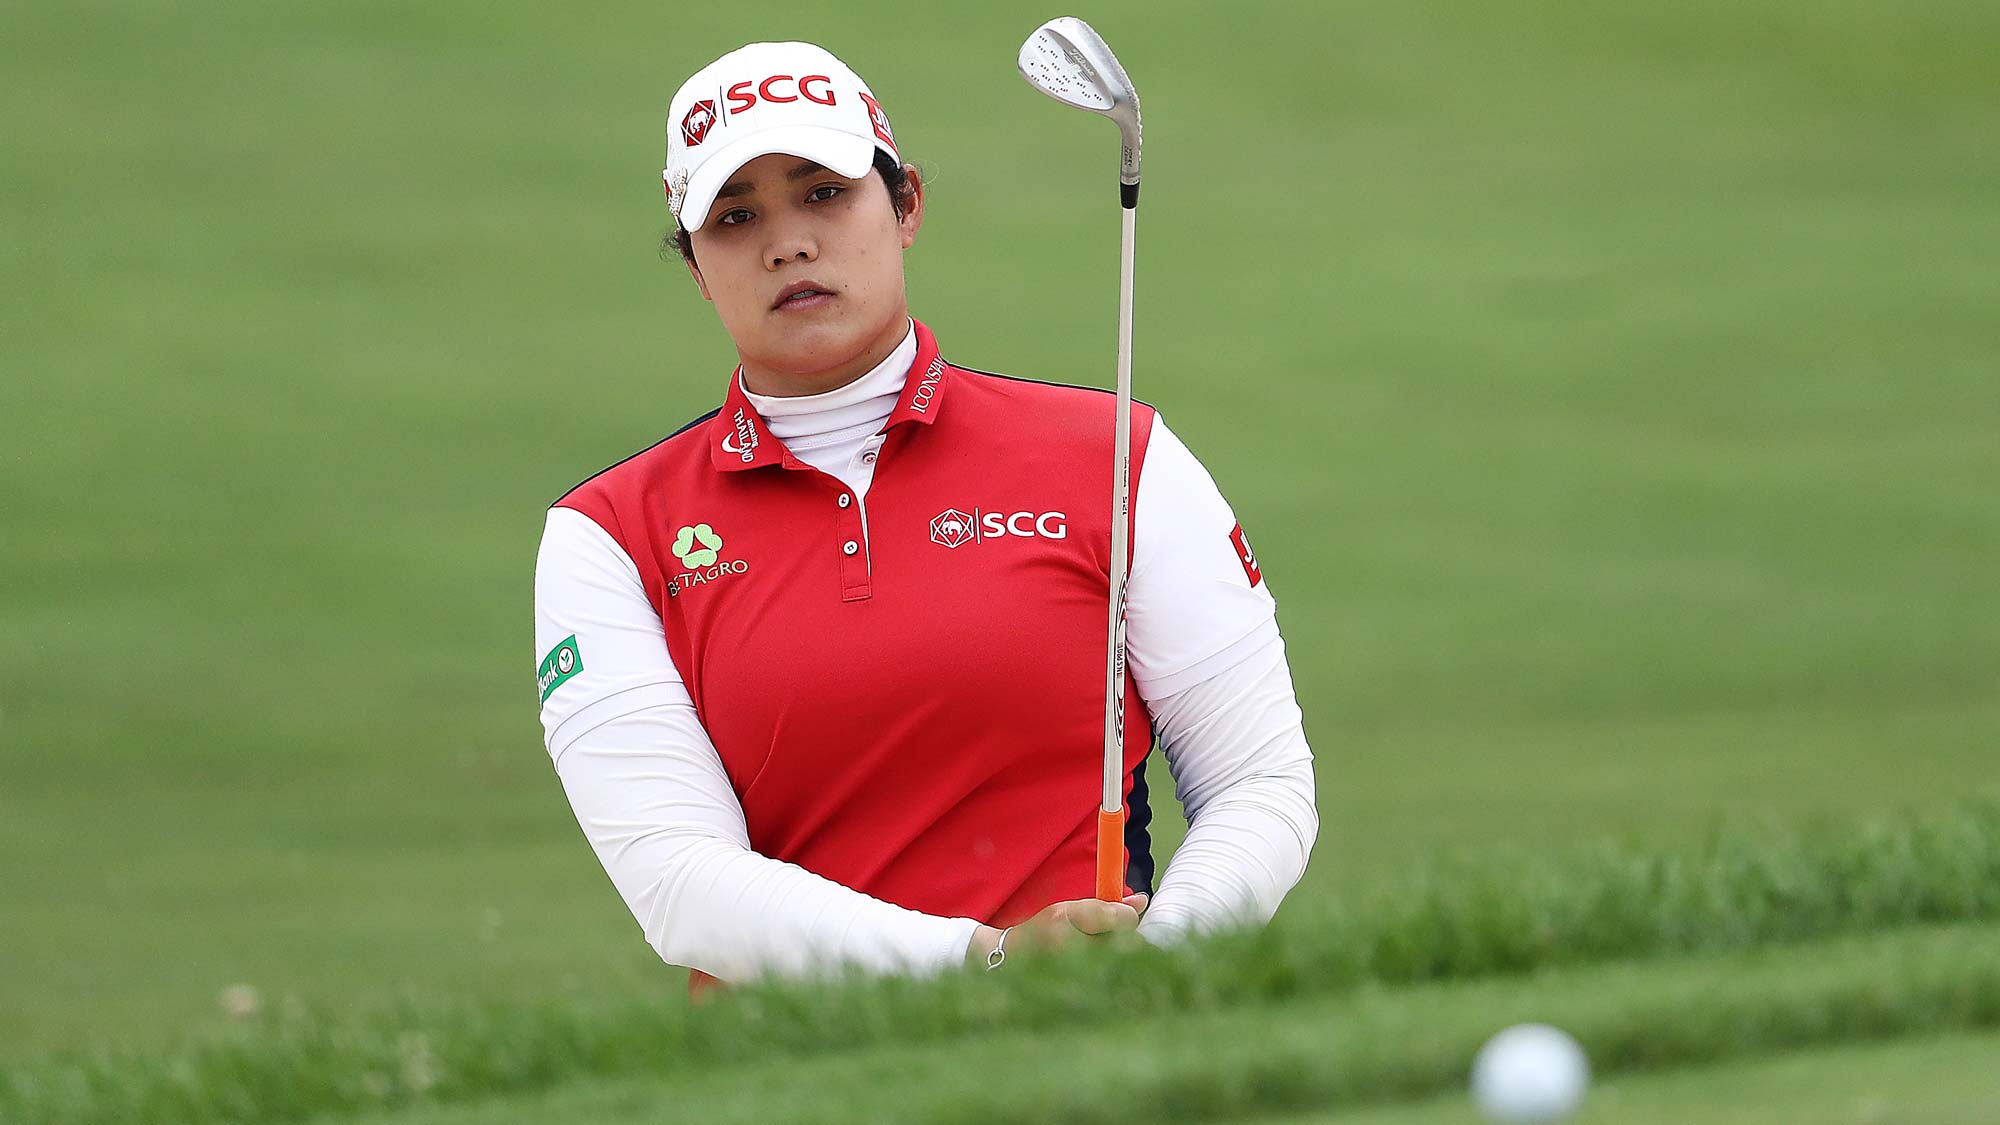 Ariya Jutanugarn of Thailand hits her third shot on the 1st hole from a bunker during the third round of the KPMG Women's PGA Championship 